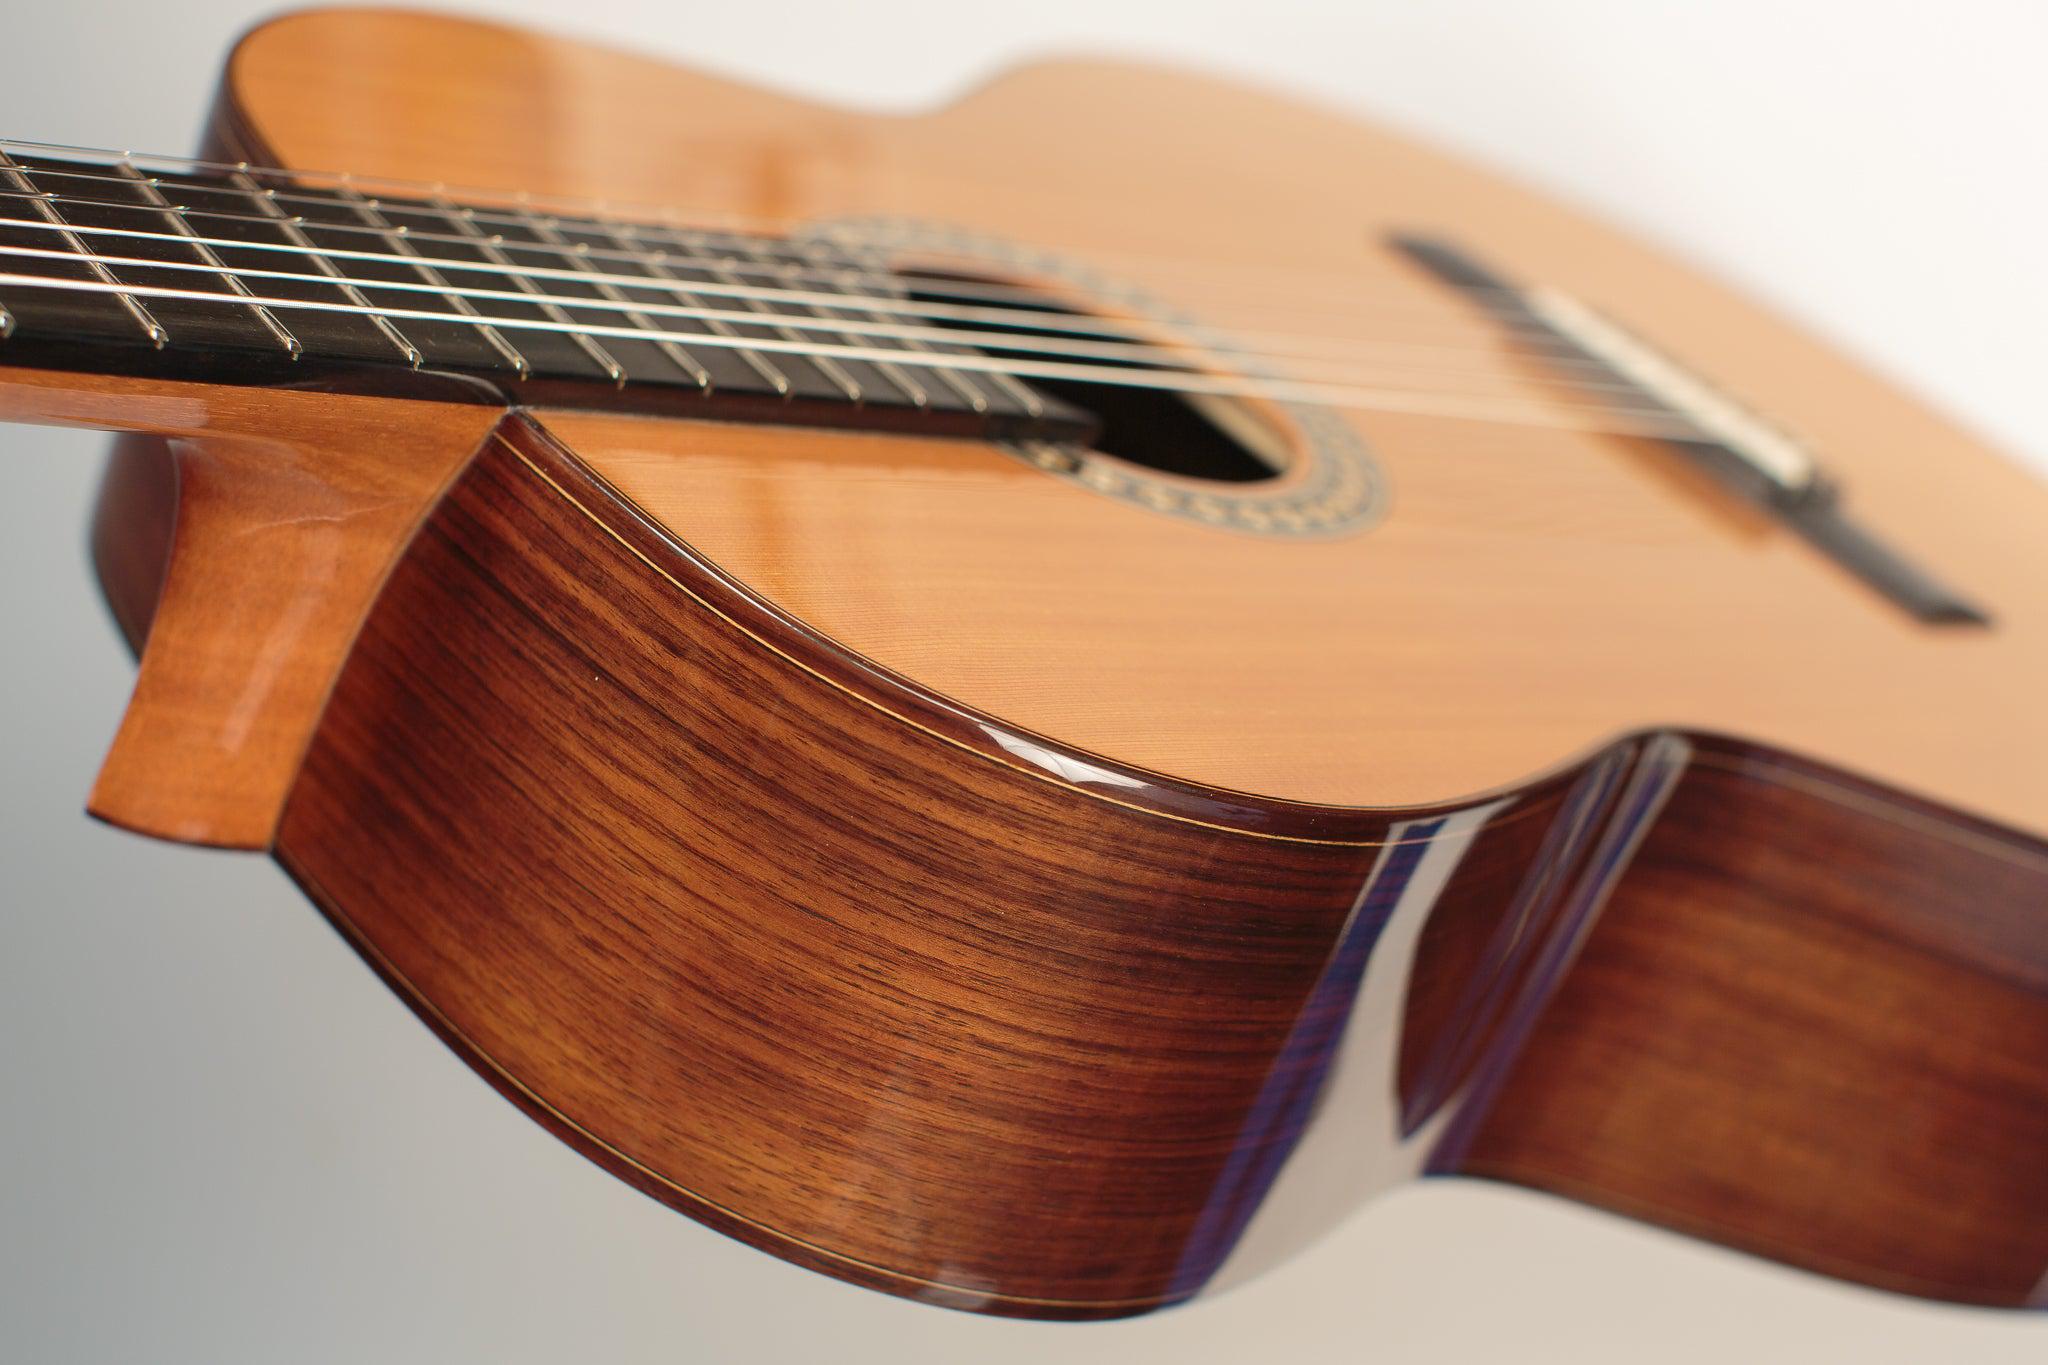 Kremona Romida Cedar Classical Guitar